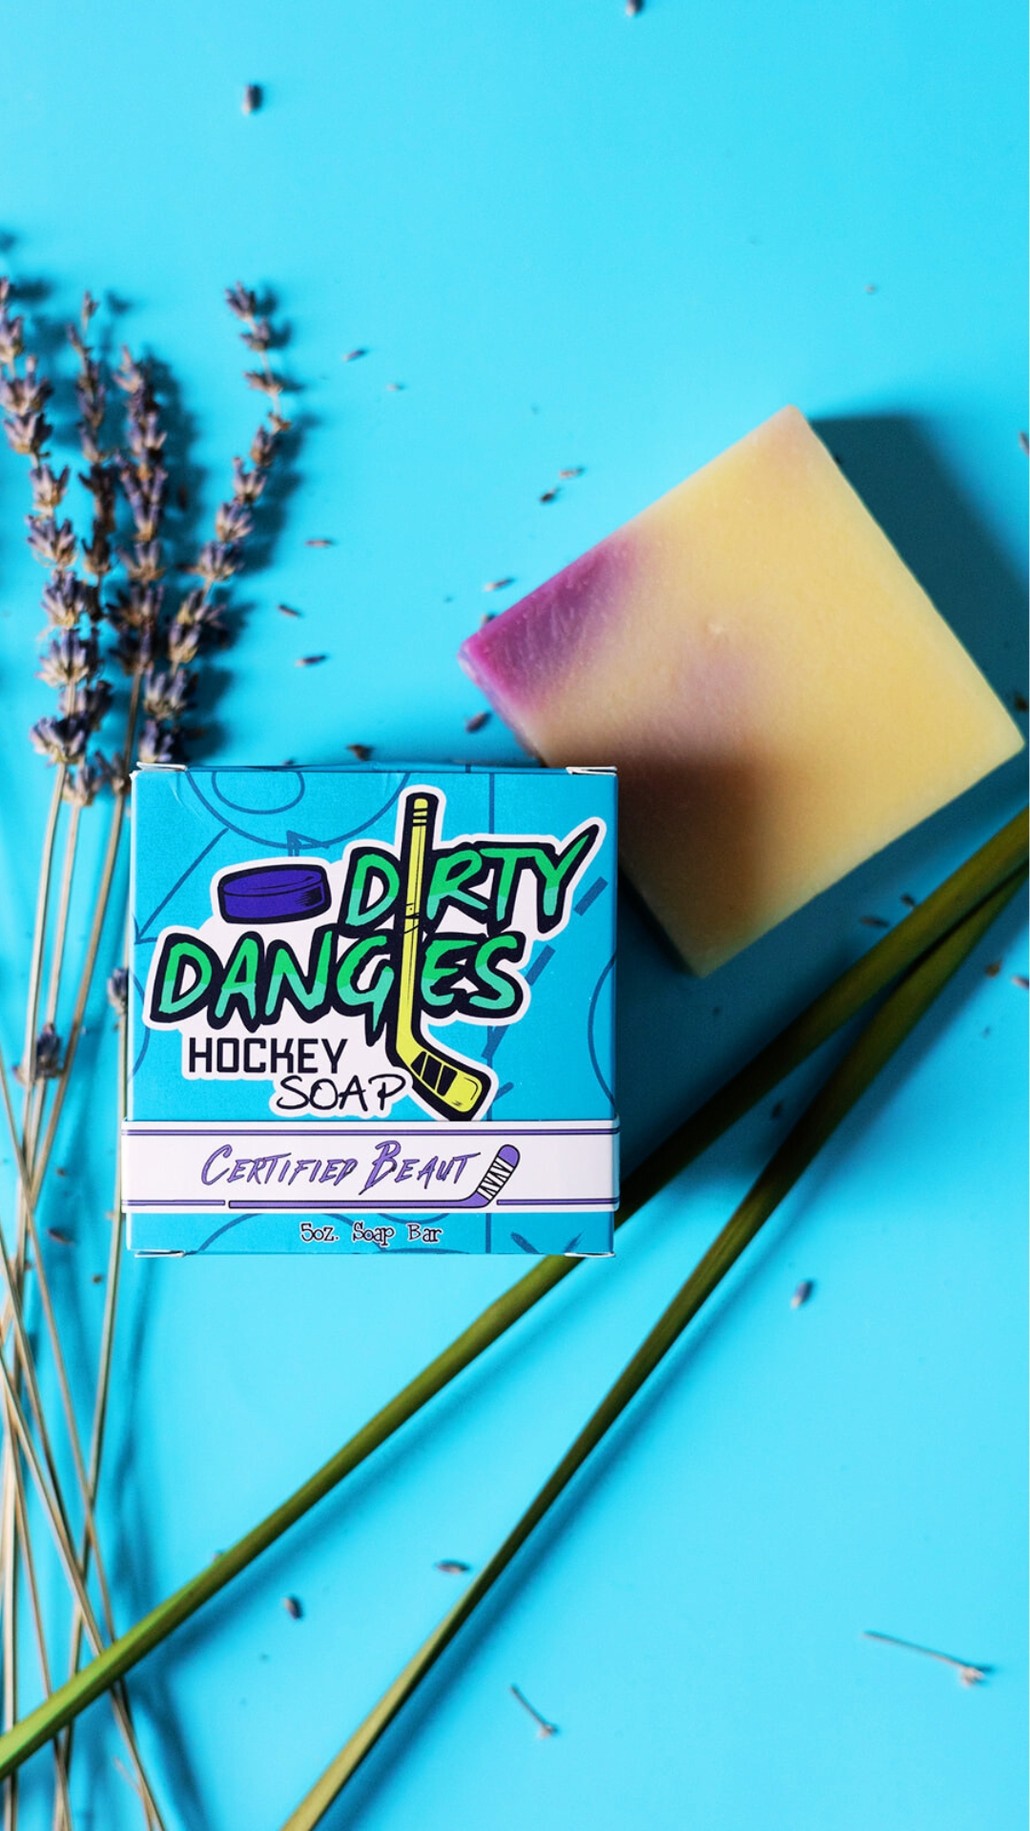 Dirty Dangles 2-in-1 Shampoo and Body Wash - Barn Burner Hockey